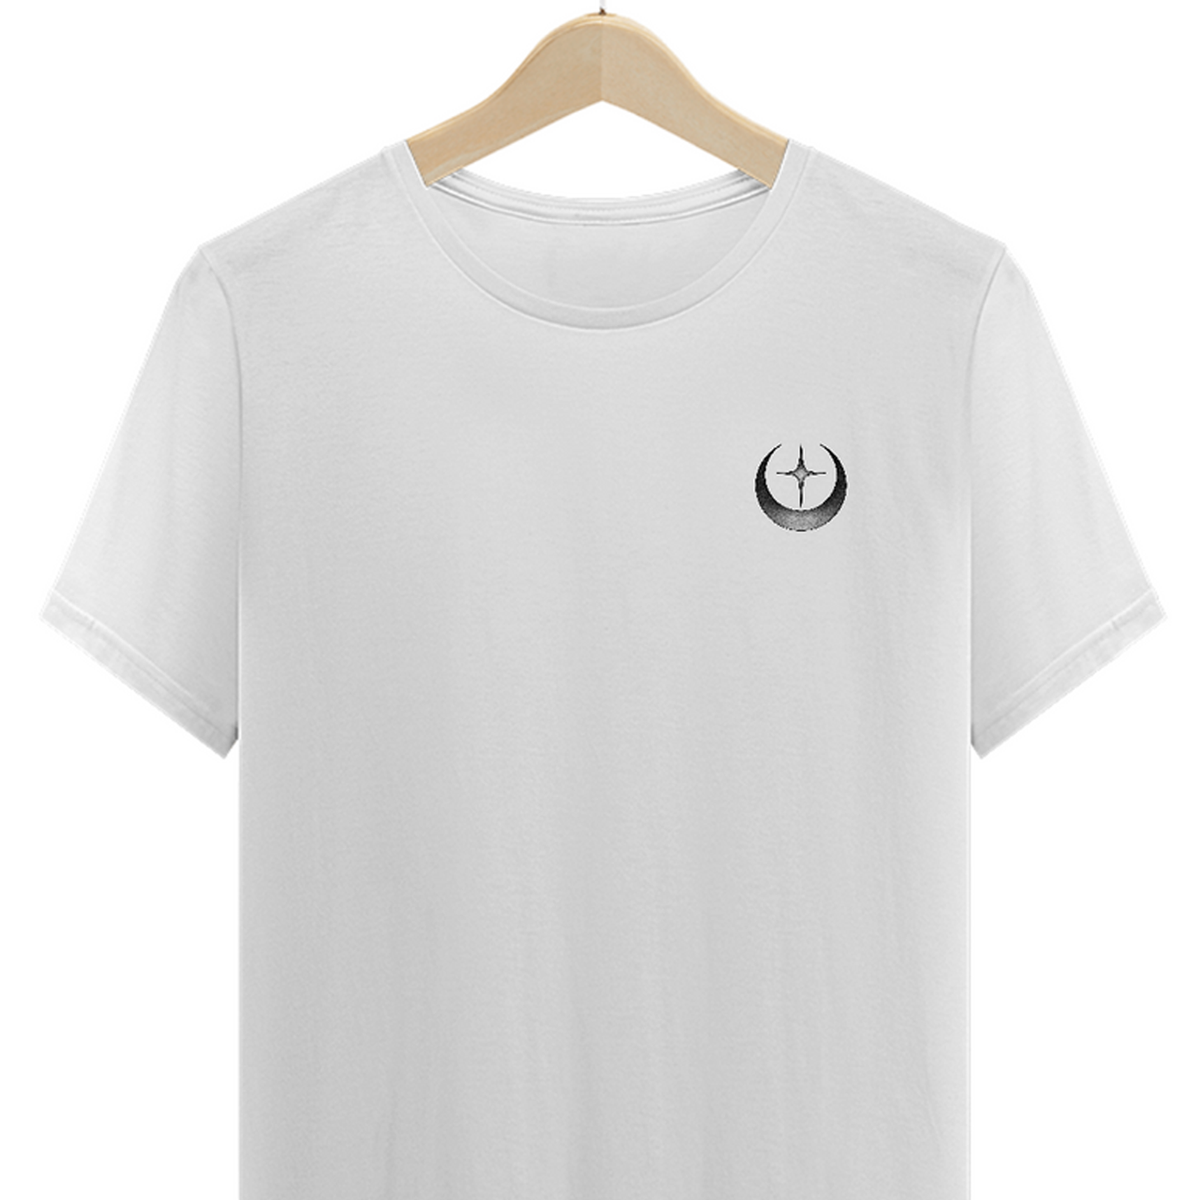 Nome do produto: Camiseta Plus Size Moonstar